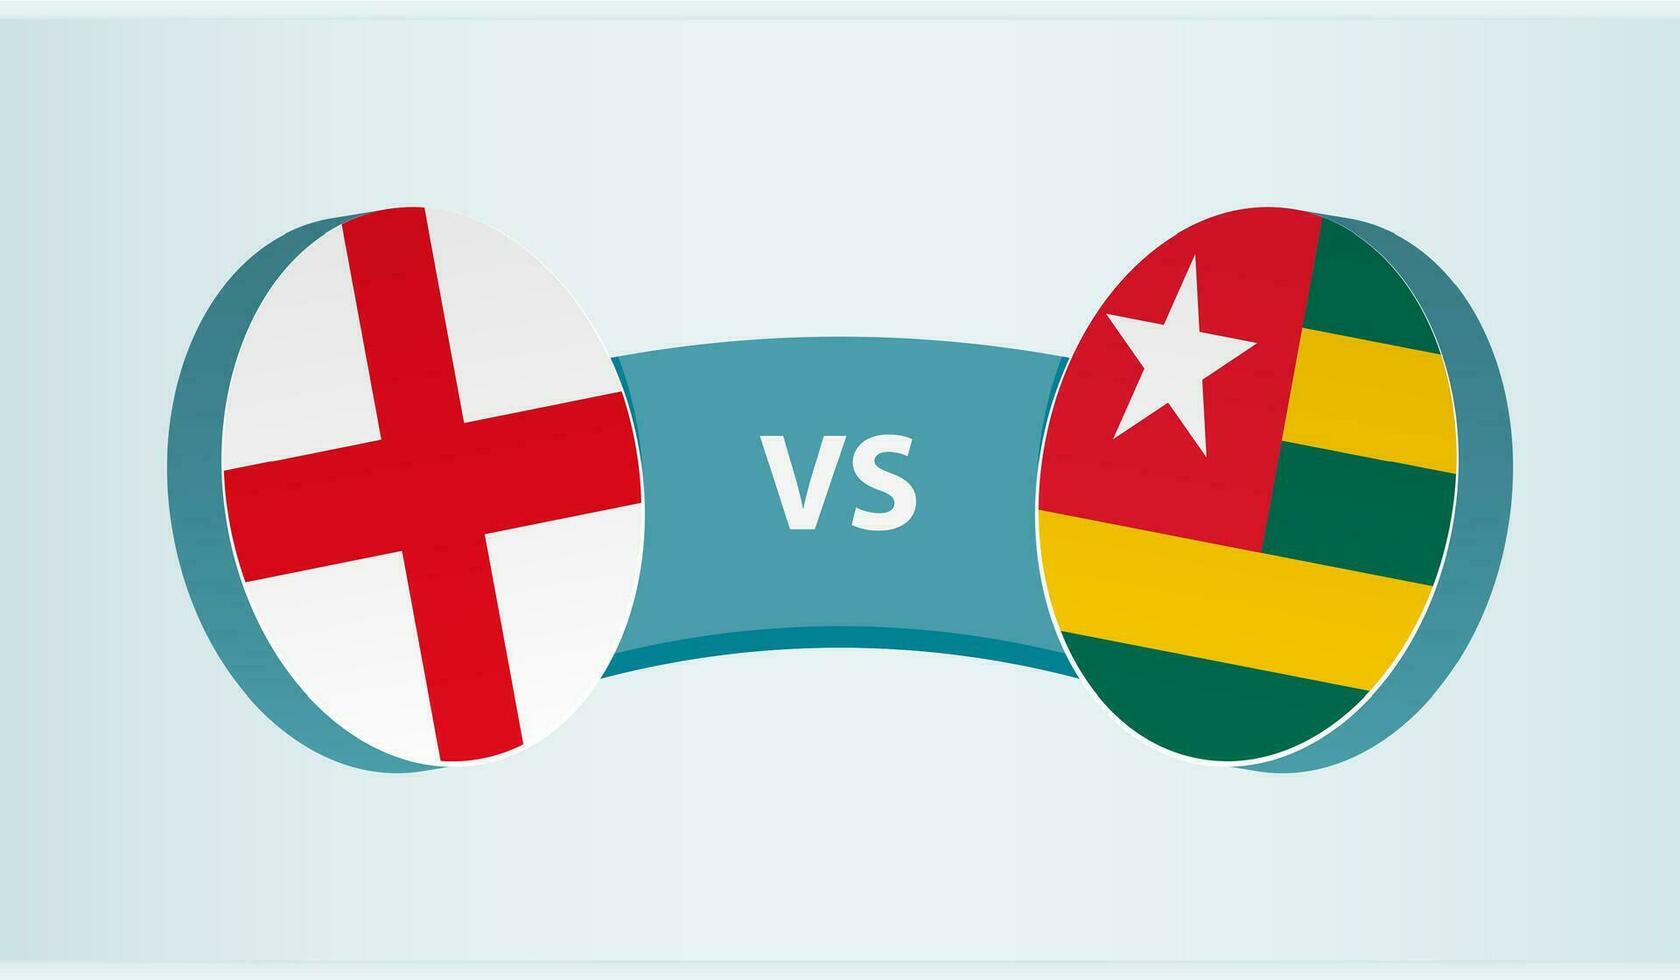 Inglaterra versus ir, equipe Esportes concorrência conceito. vetor